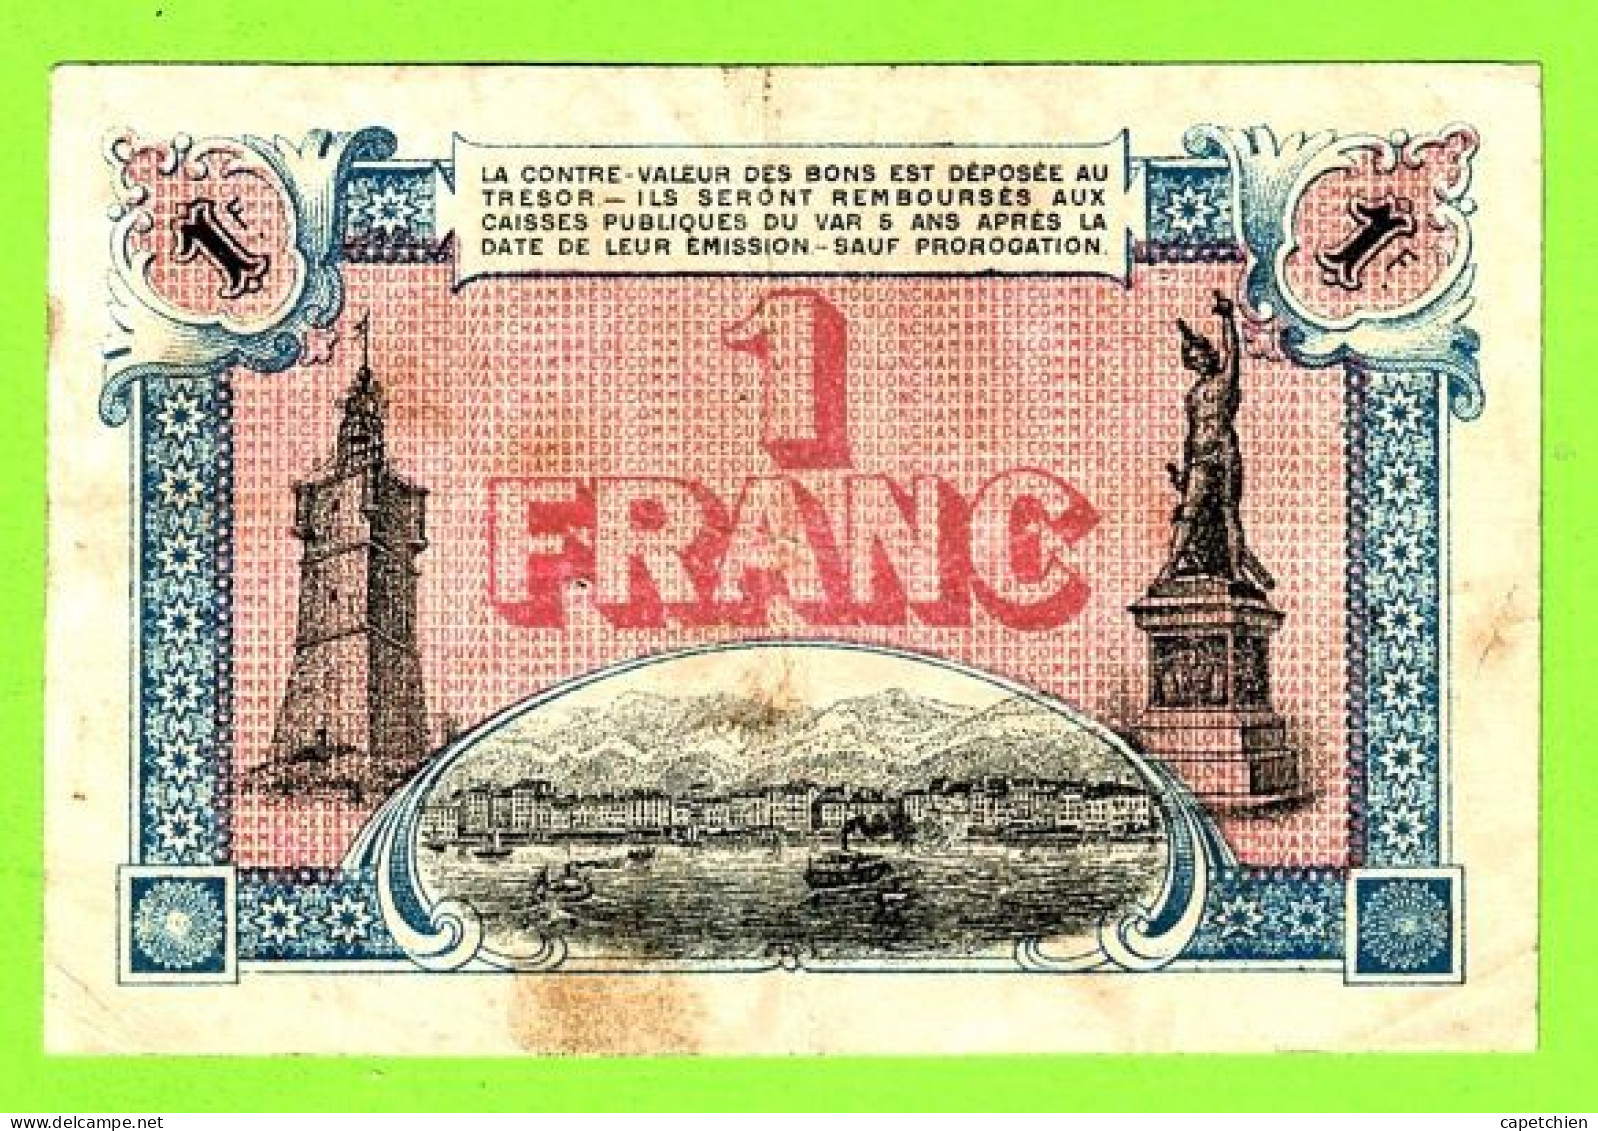 FRANCE/ CHAMBRE De COMMERCE De TOULON Et Du VAR / 1 FRANC/ 3 MARS 1919 / 01,143 / 5 Eme SERIE 338 - Handelskammer